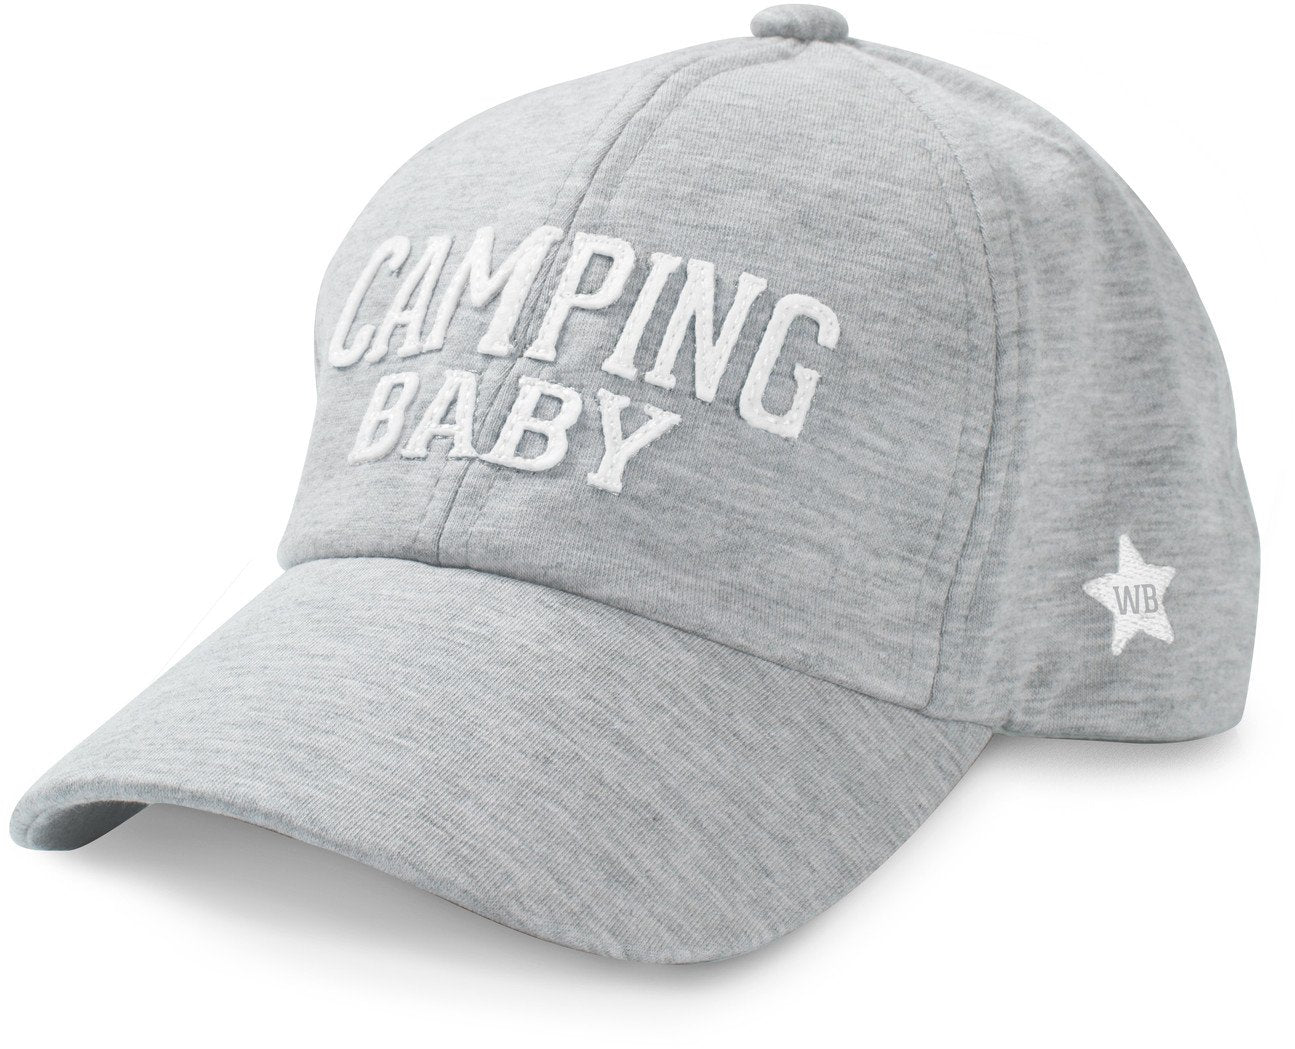 Camping Baby Adjustable Toddler Baseball Hat (1-3 Years) Baby Hat We Baby - GigglesGear.com